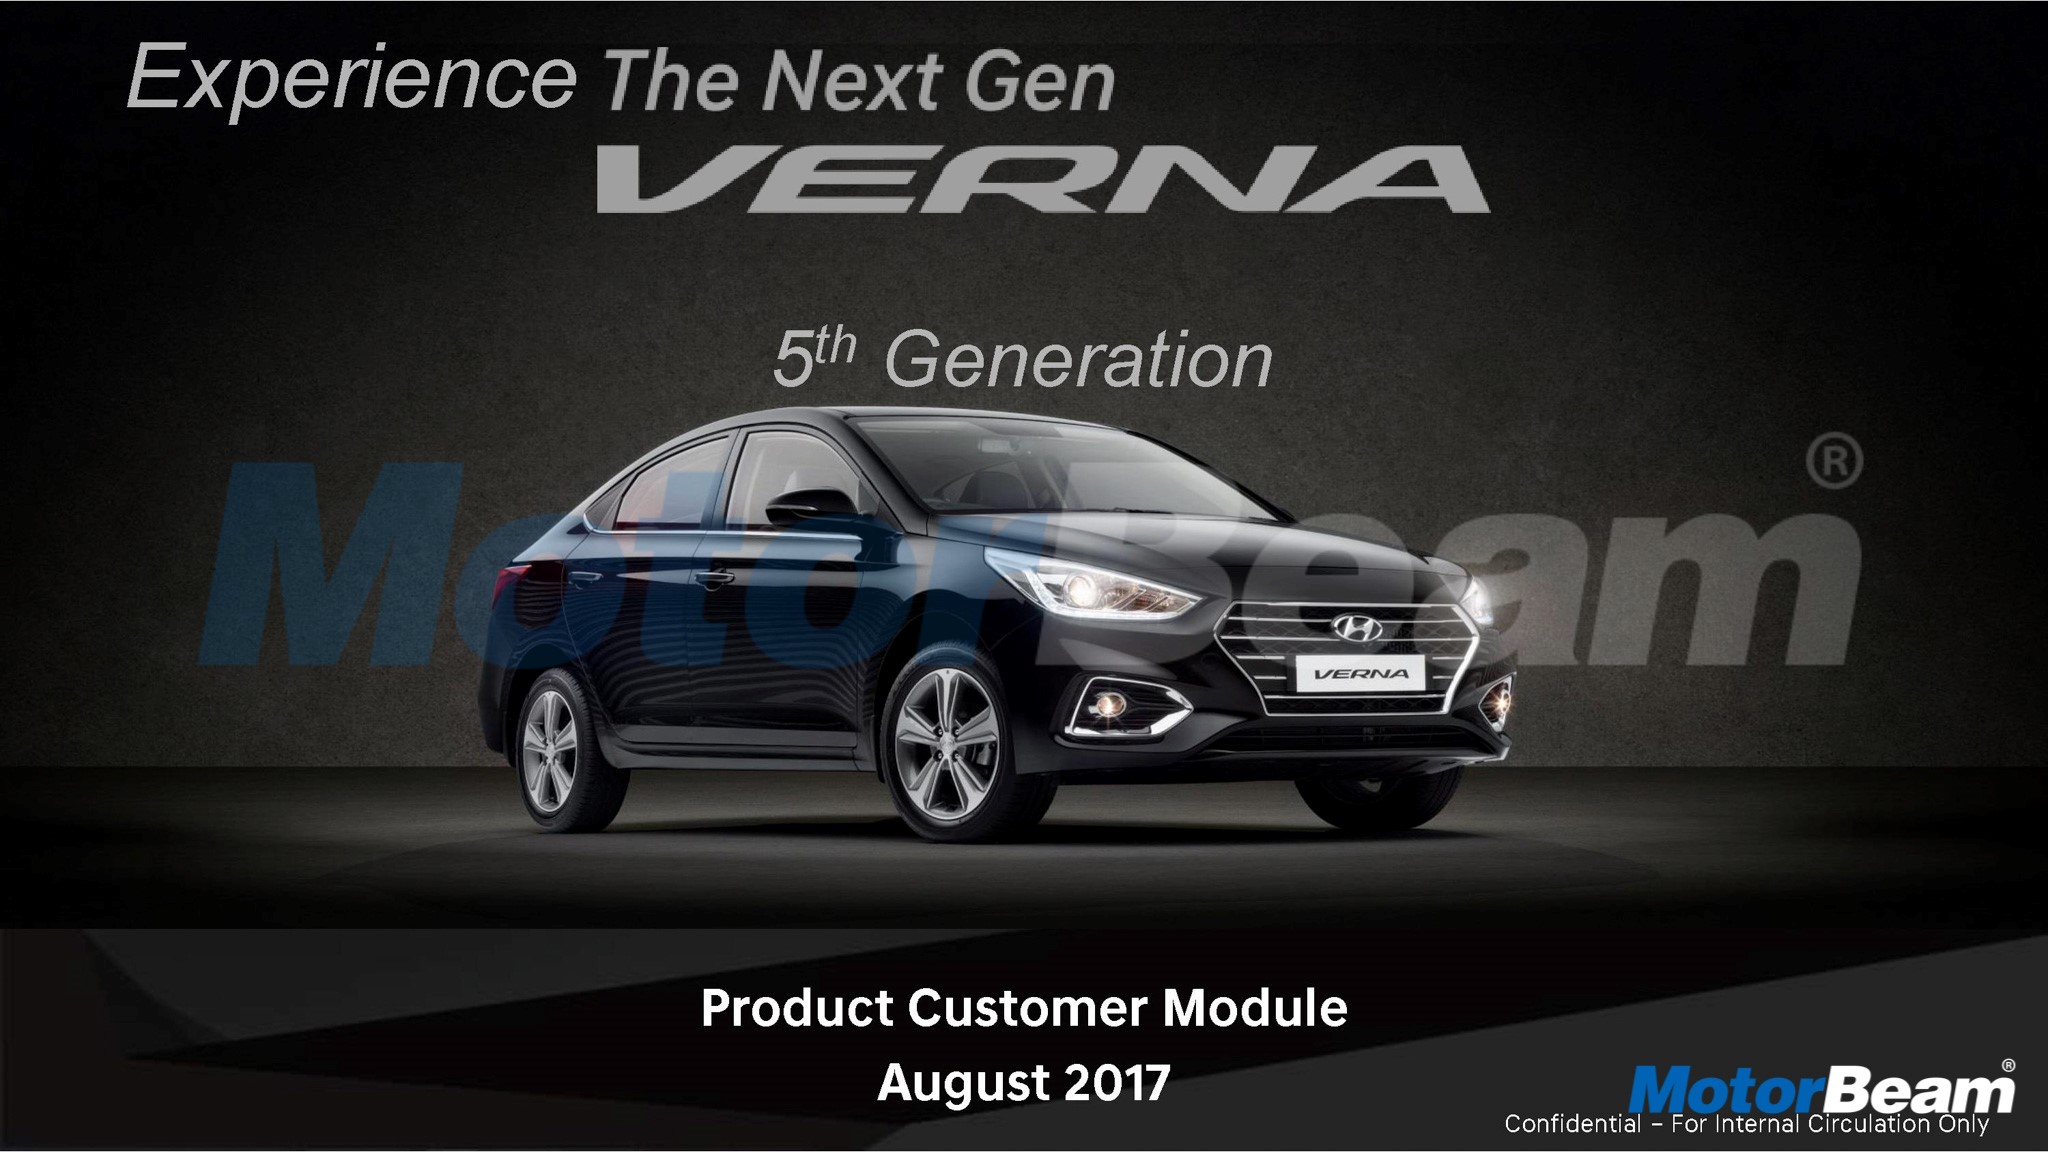 2017 Hyundai Verna Product Presentation